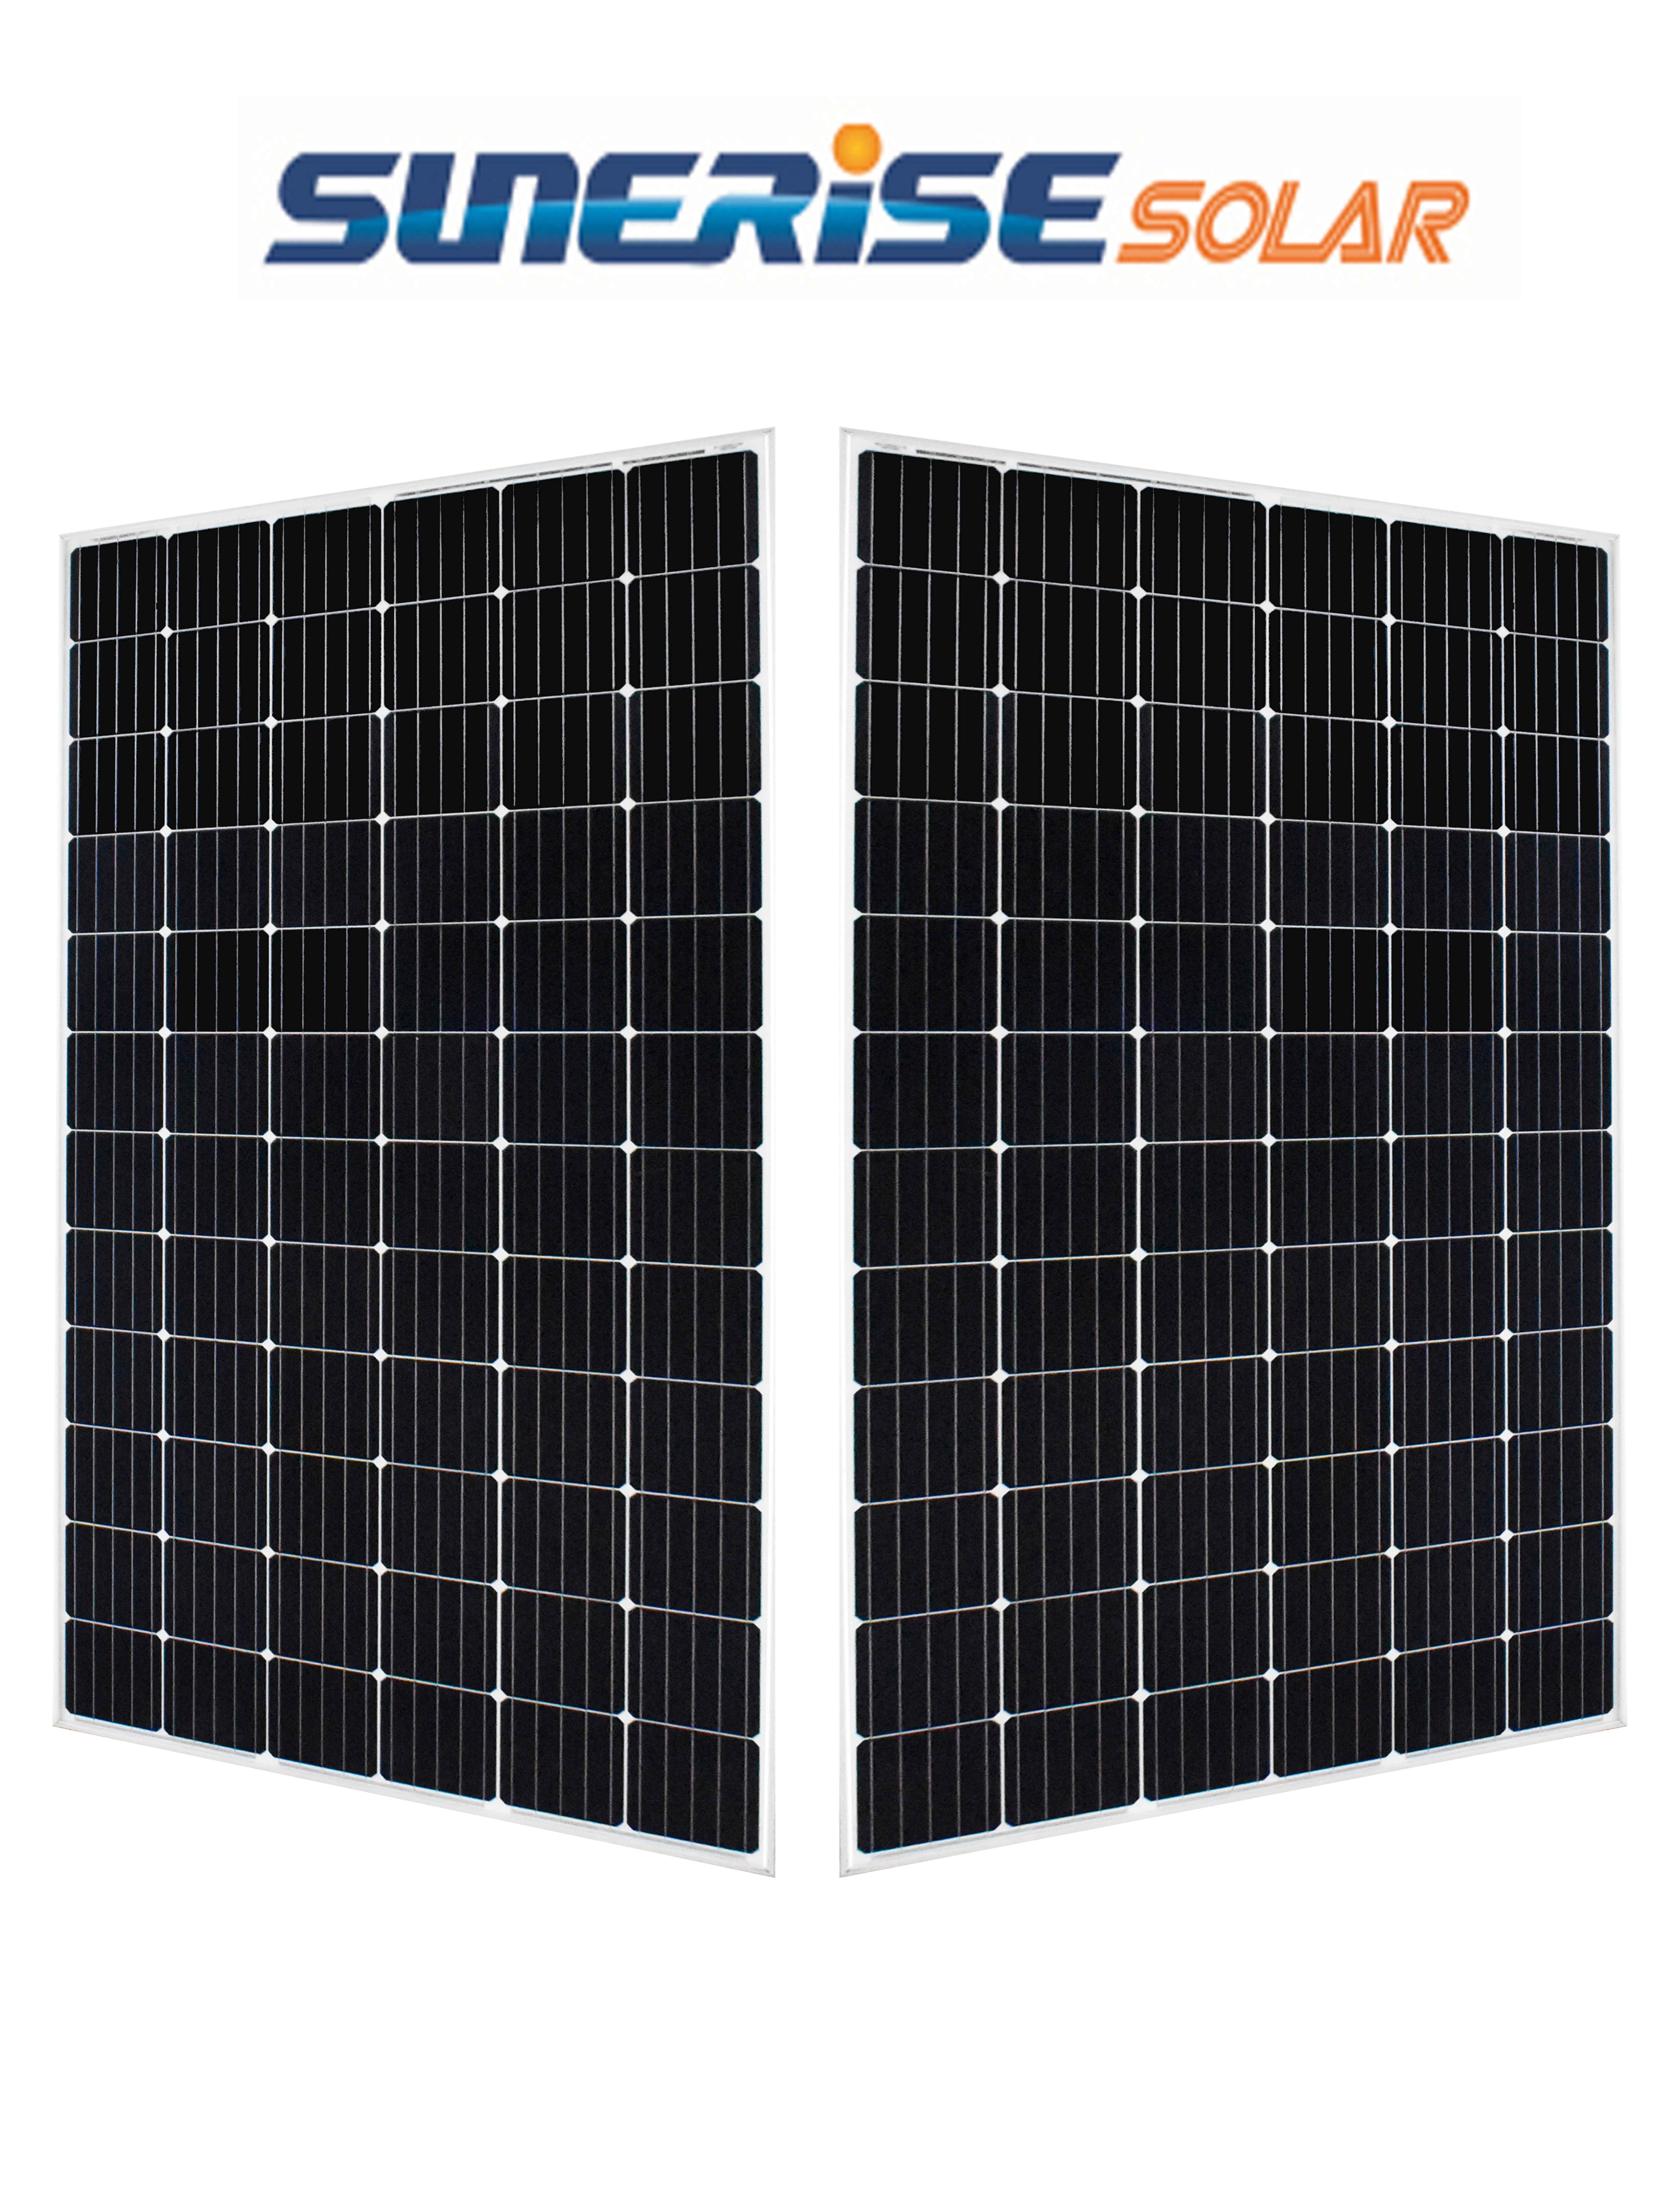 Roof Waterproof 395W 49.5V Monocrystalline Solar Cell